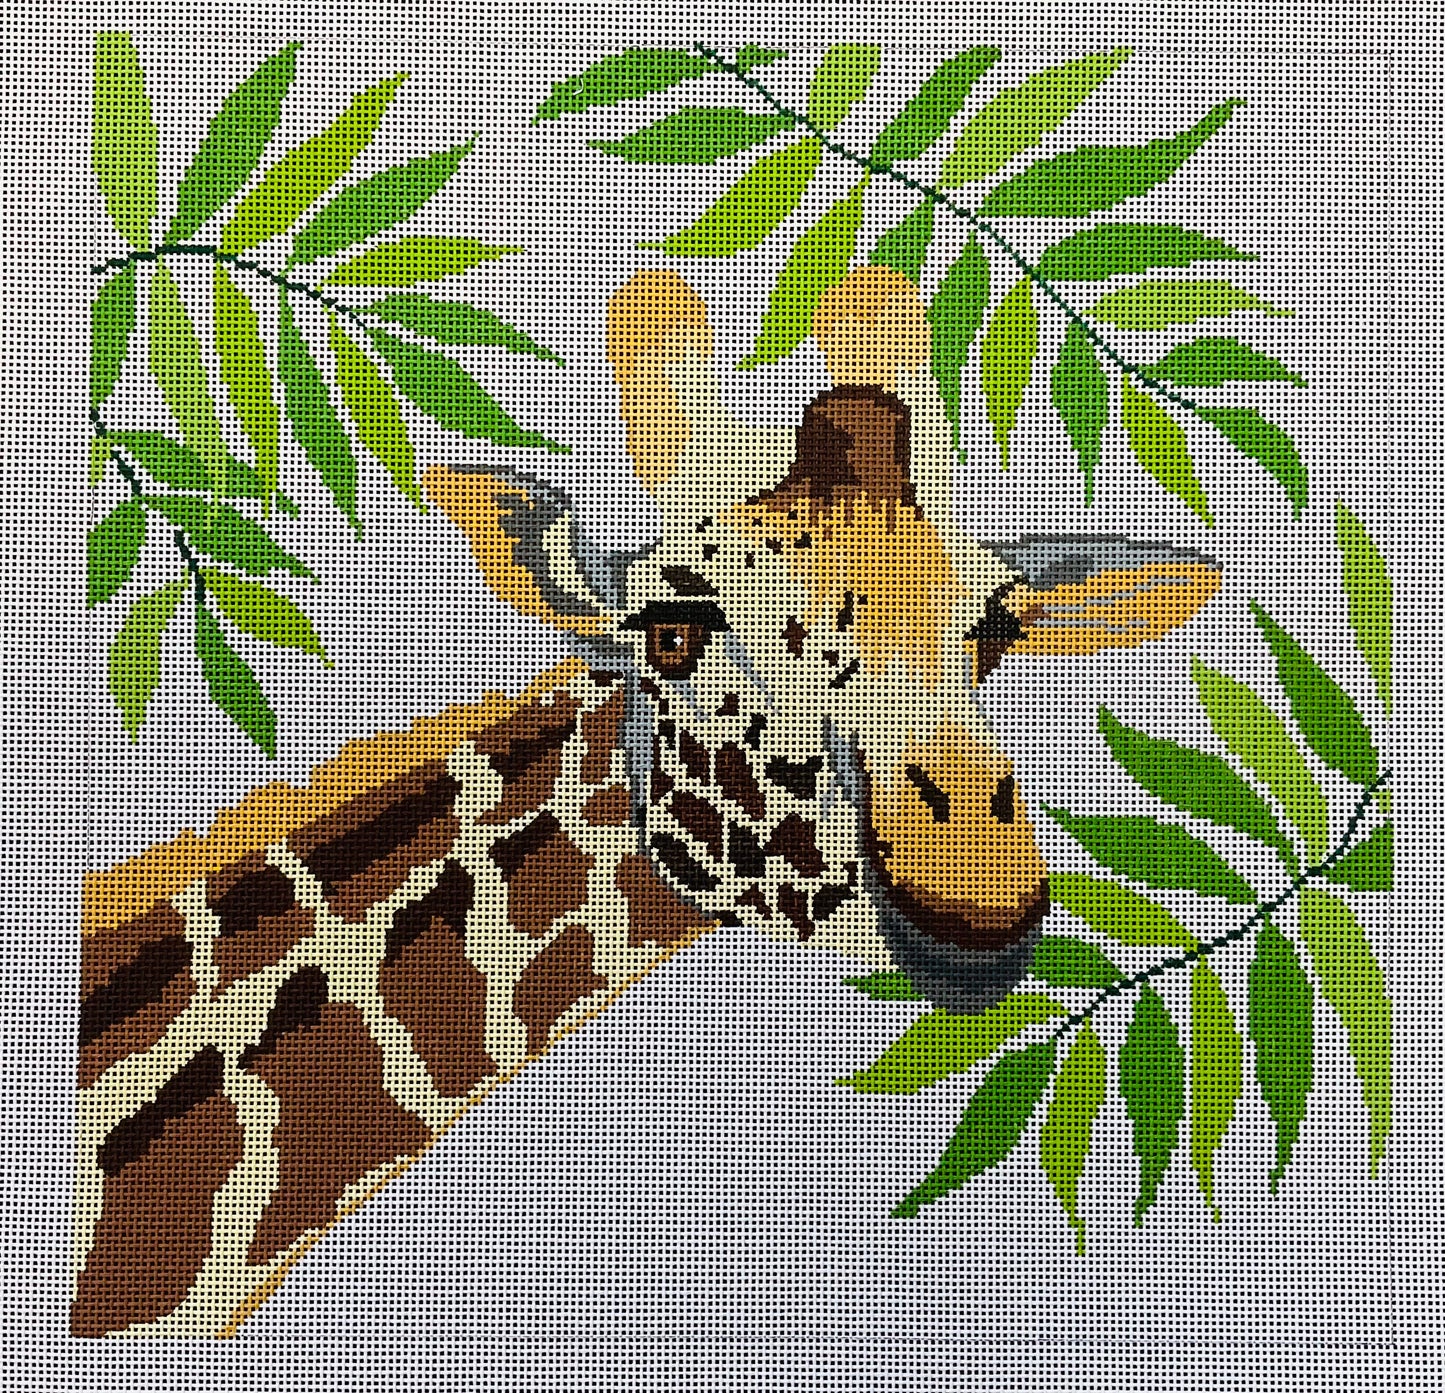 Giraffe and Ferns